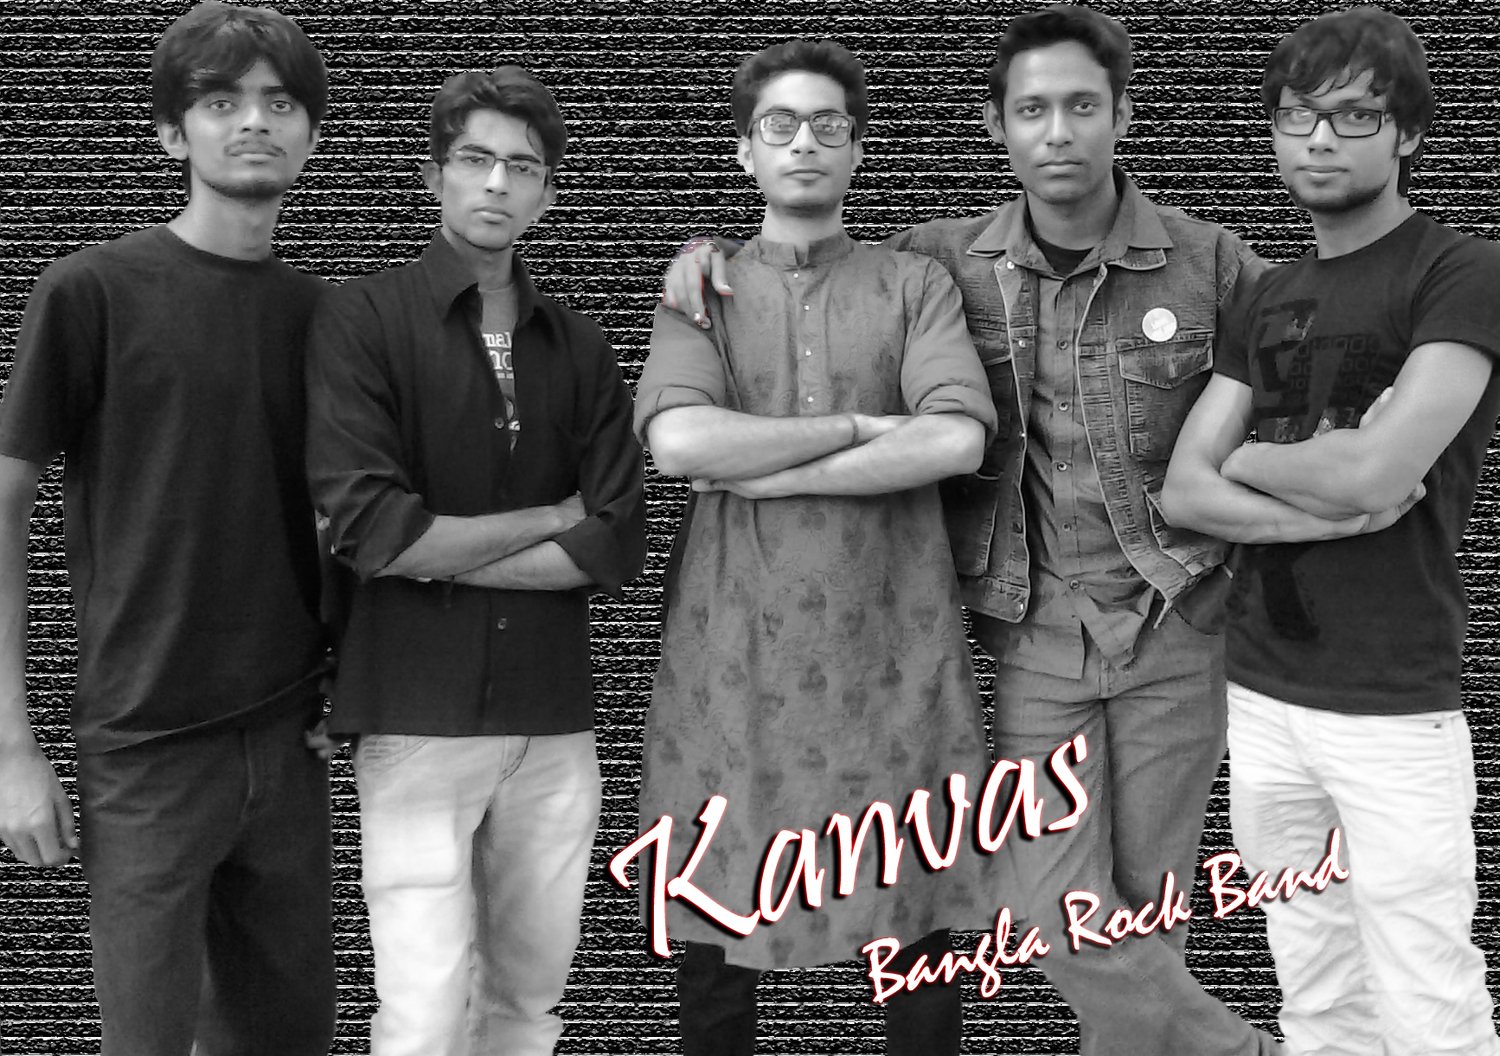 Kanvas Bangla Band Profile Pic